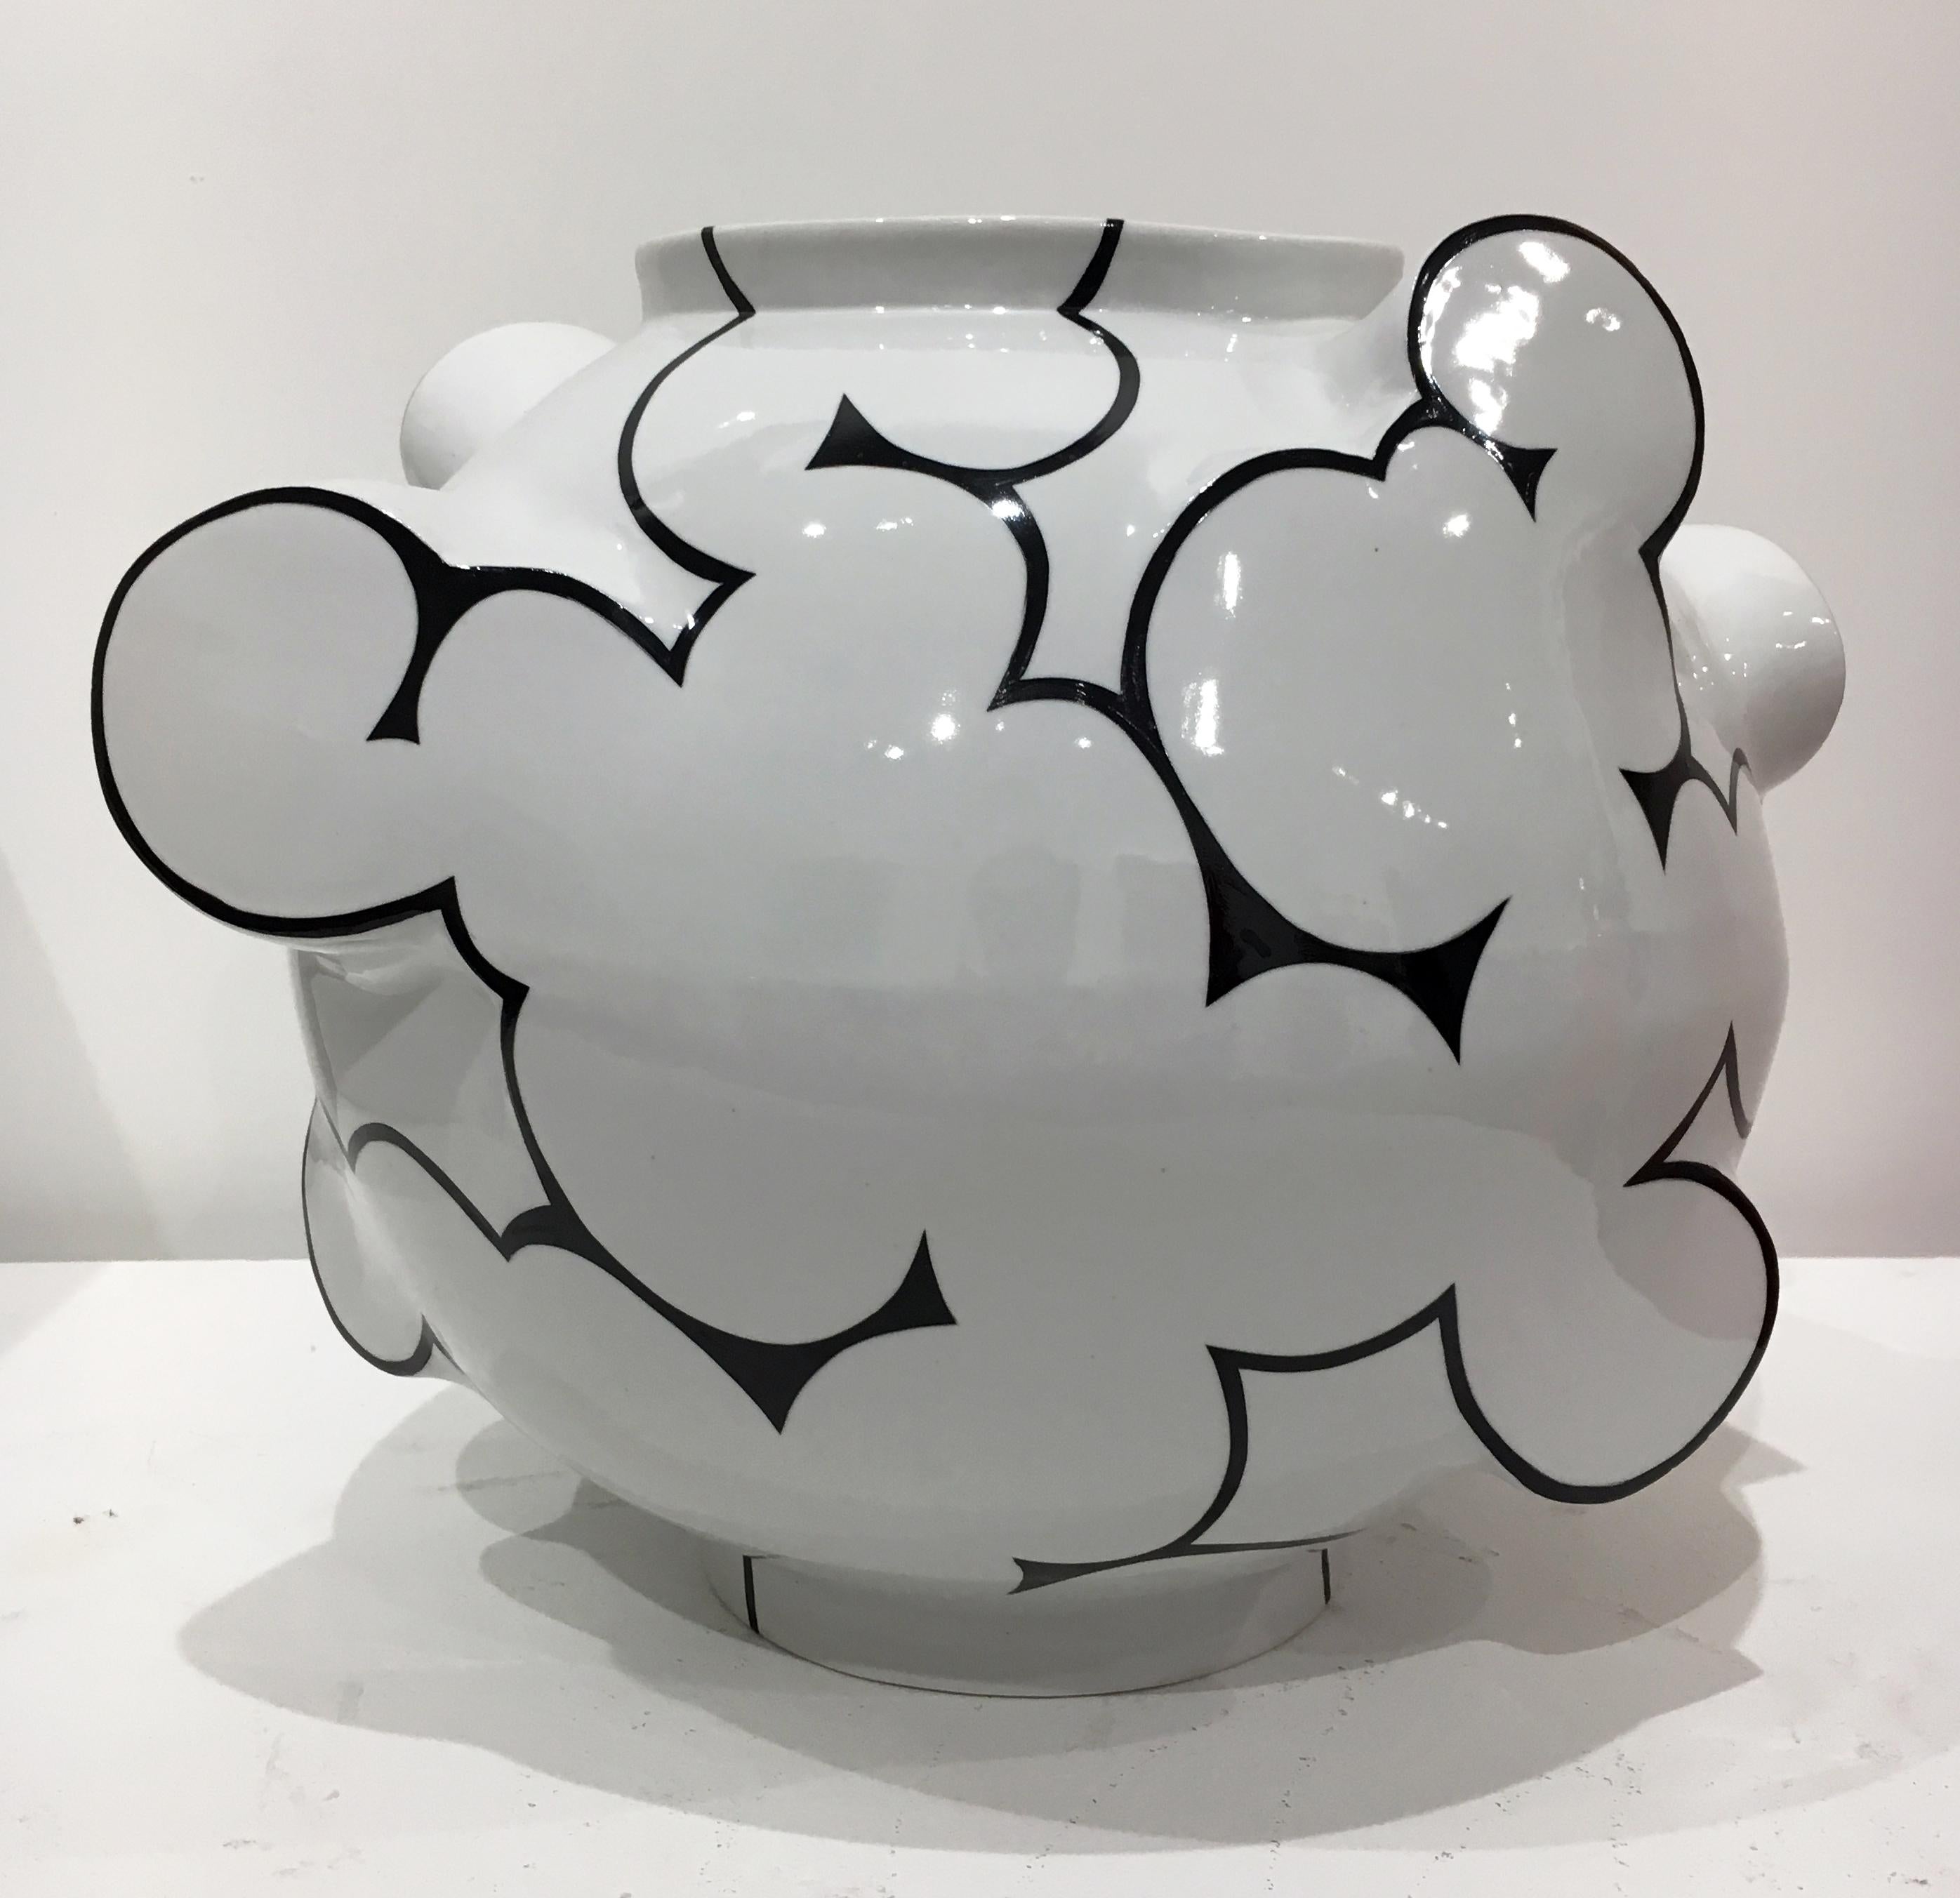 Sam Chung Abstract Sculpture - Cloud Moon Jar, Contemporary Ceramic Porcelain Sculpture with Glaze, China Paint